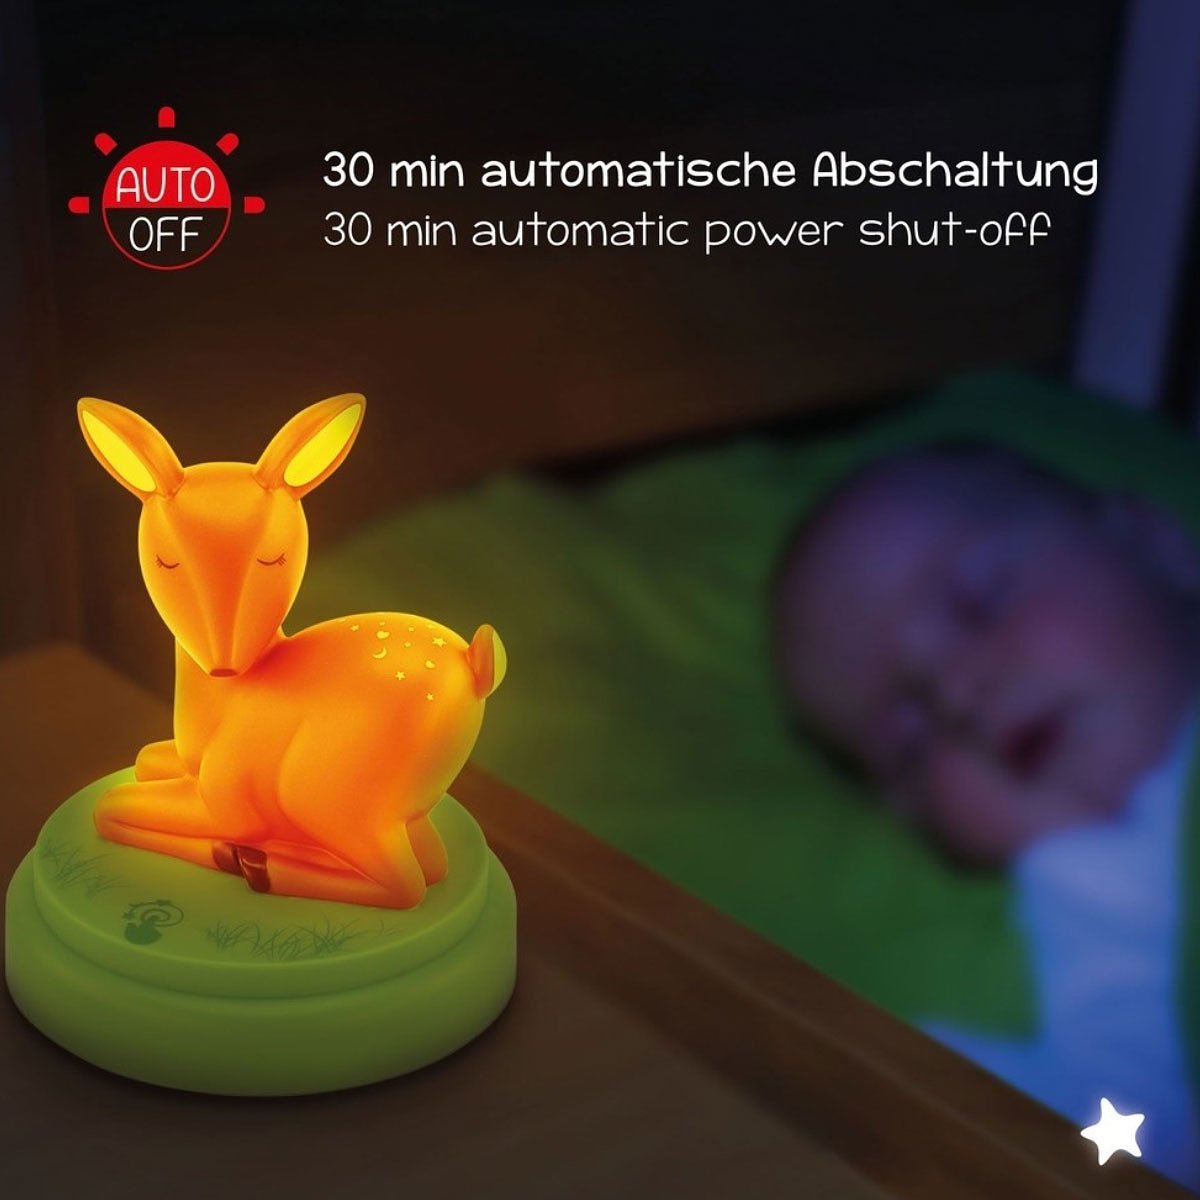 Mobile night light deer mobile, the LED LIGHT sleep aid for children as a deer figure